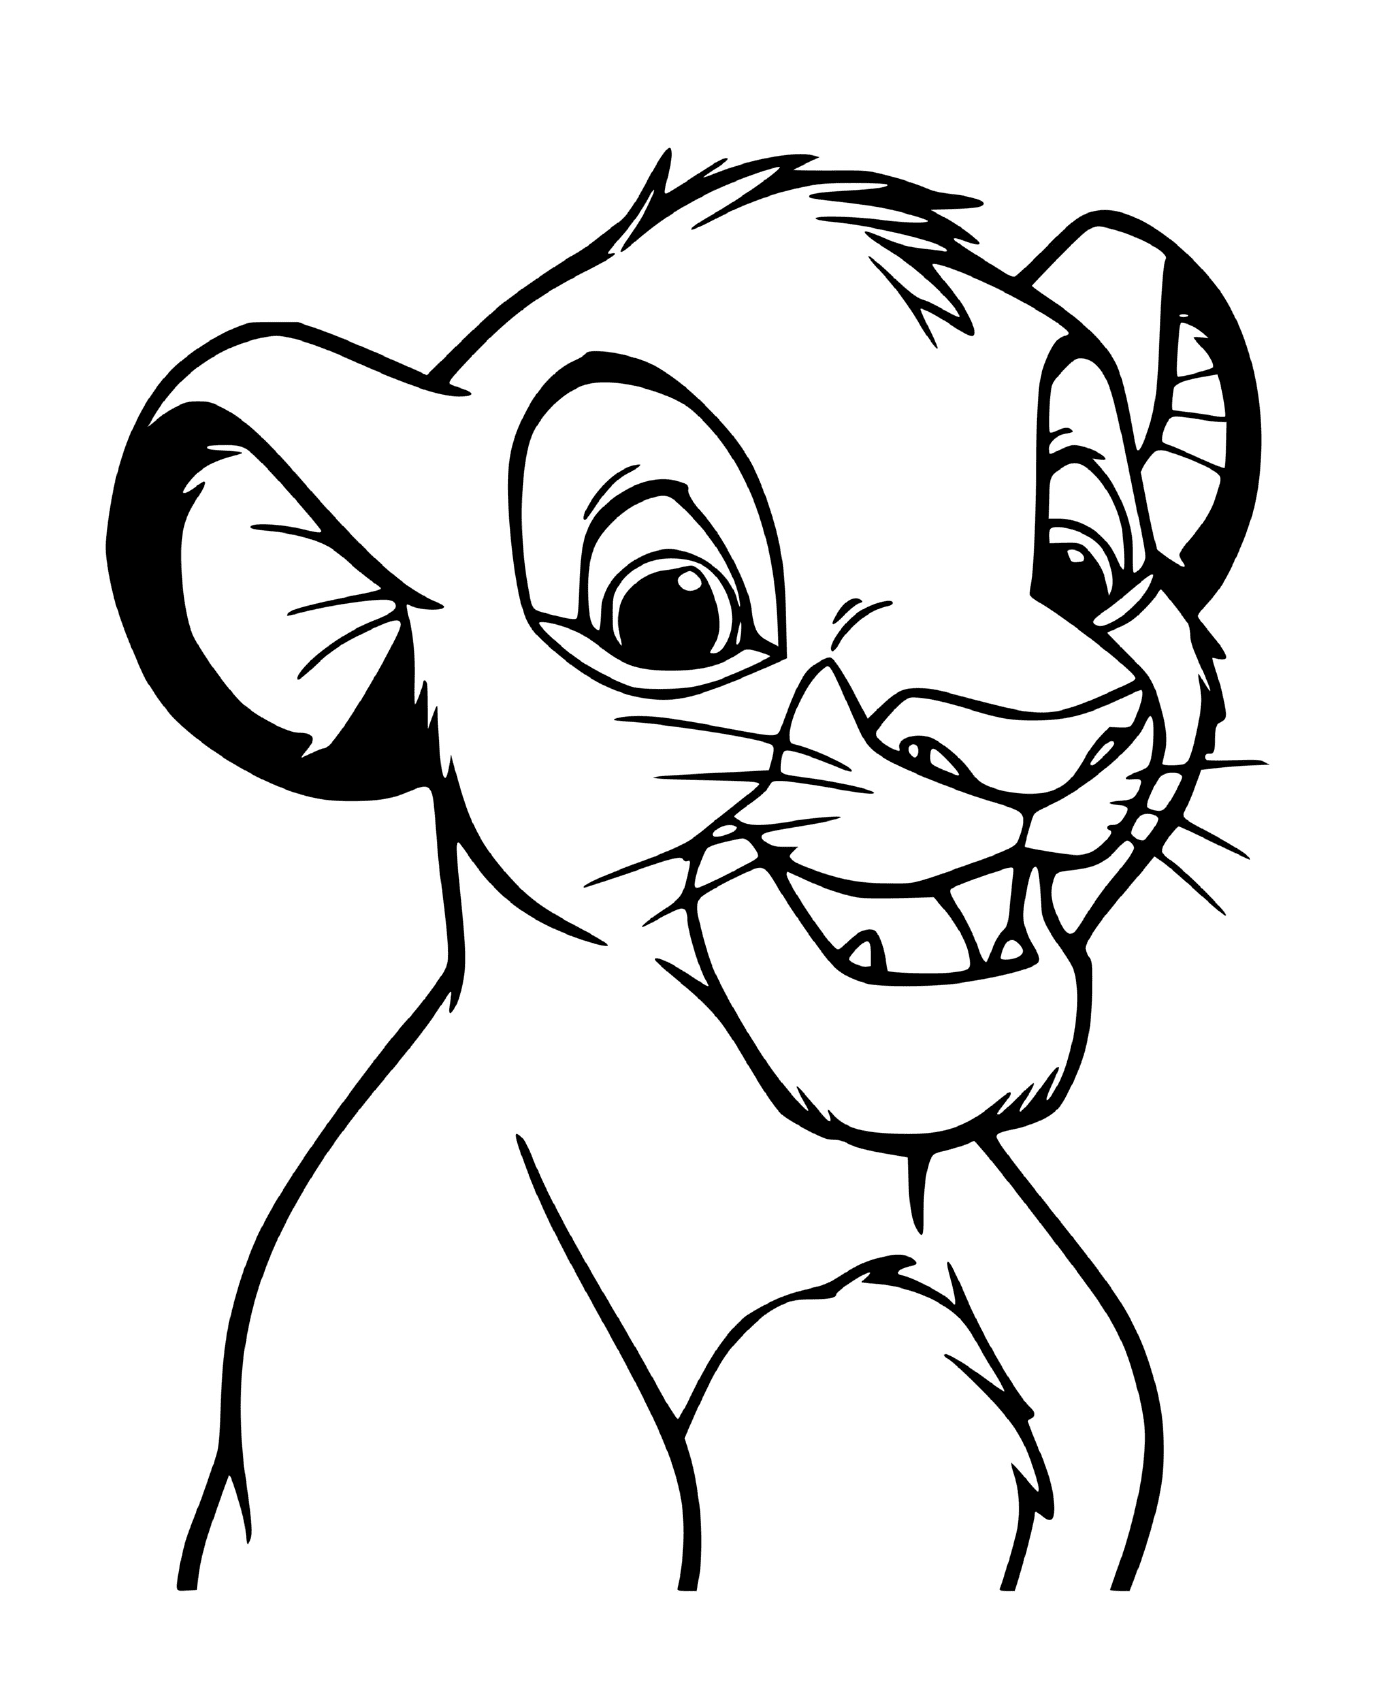  Simba, little lion player 